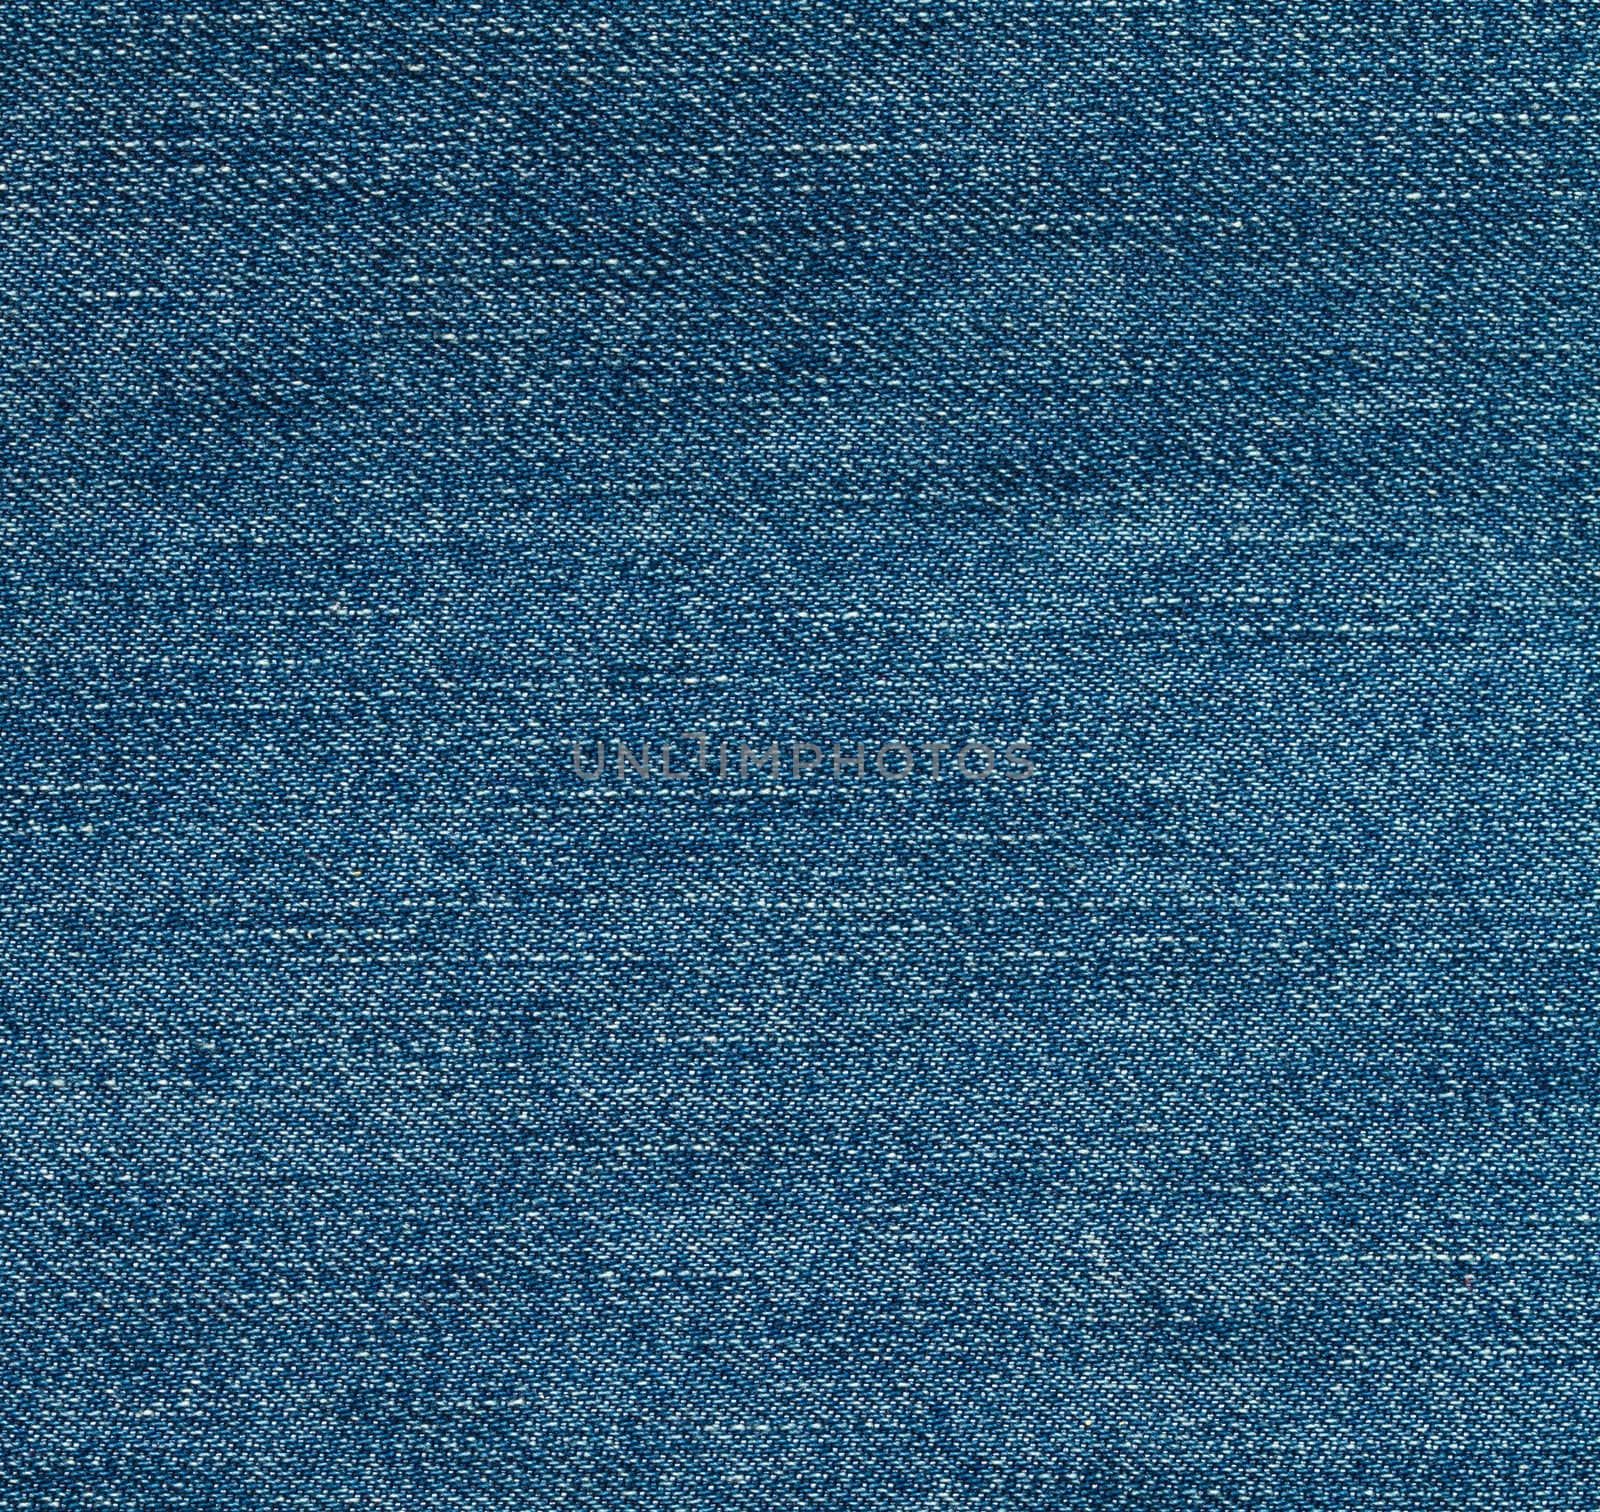 blue jean background  by lsantilli